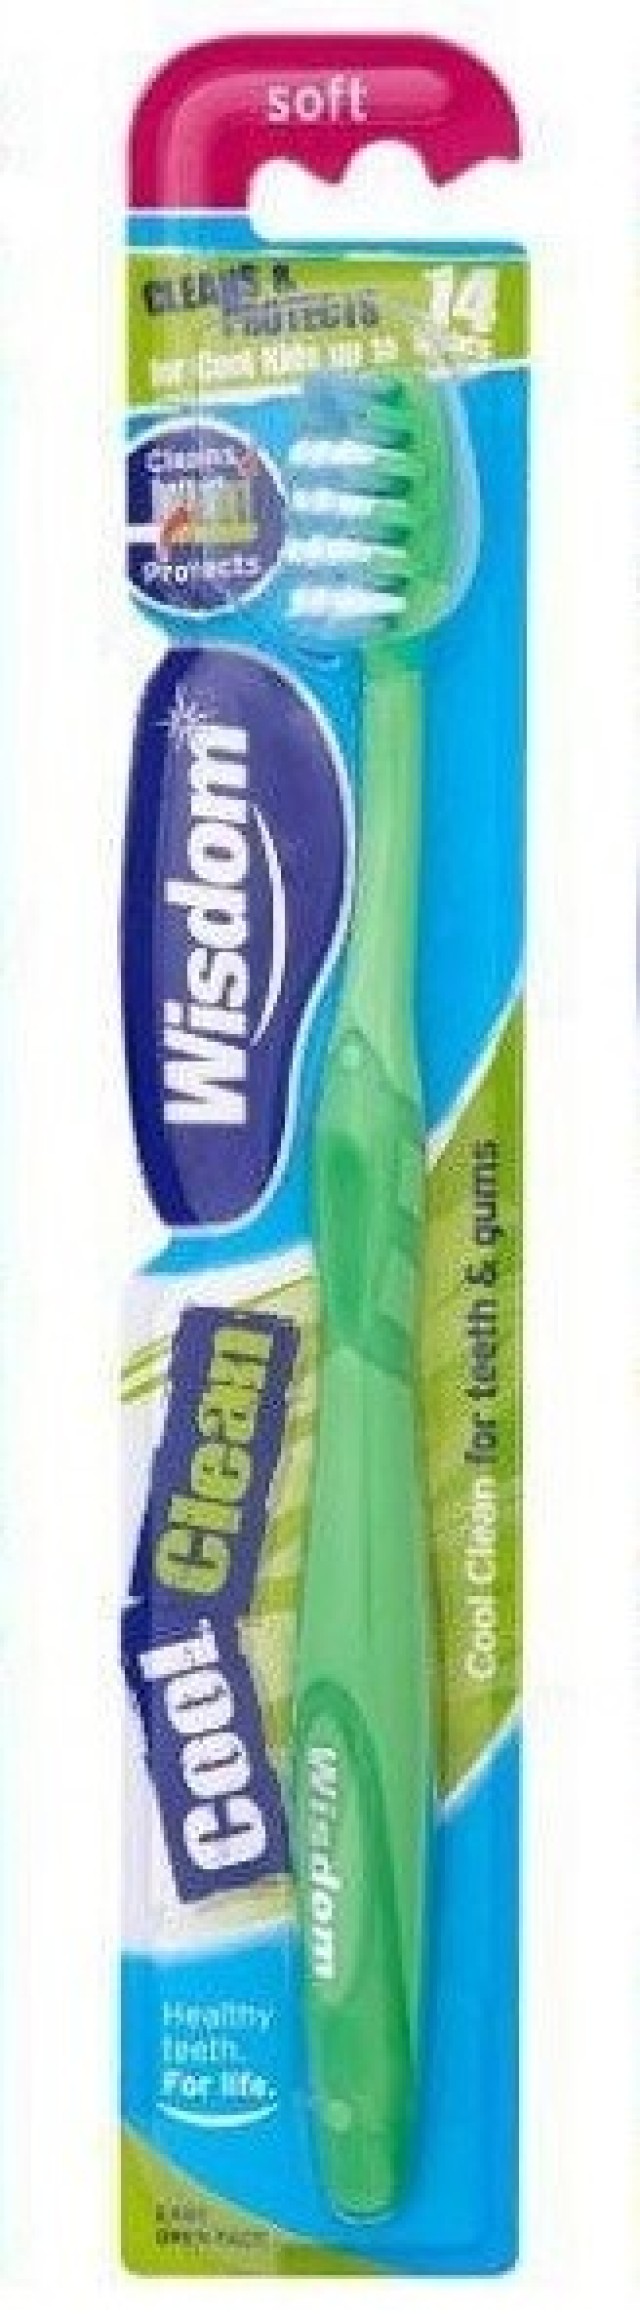 Wisdom Cool Clean Teen Toothbrush Soft Οδοντόβουρτσα Μαλακή Για Παιδιά 14 Ετών+ Χρώμα:Πράσινο 1 Τεμάχιο